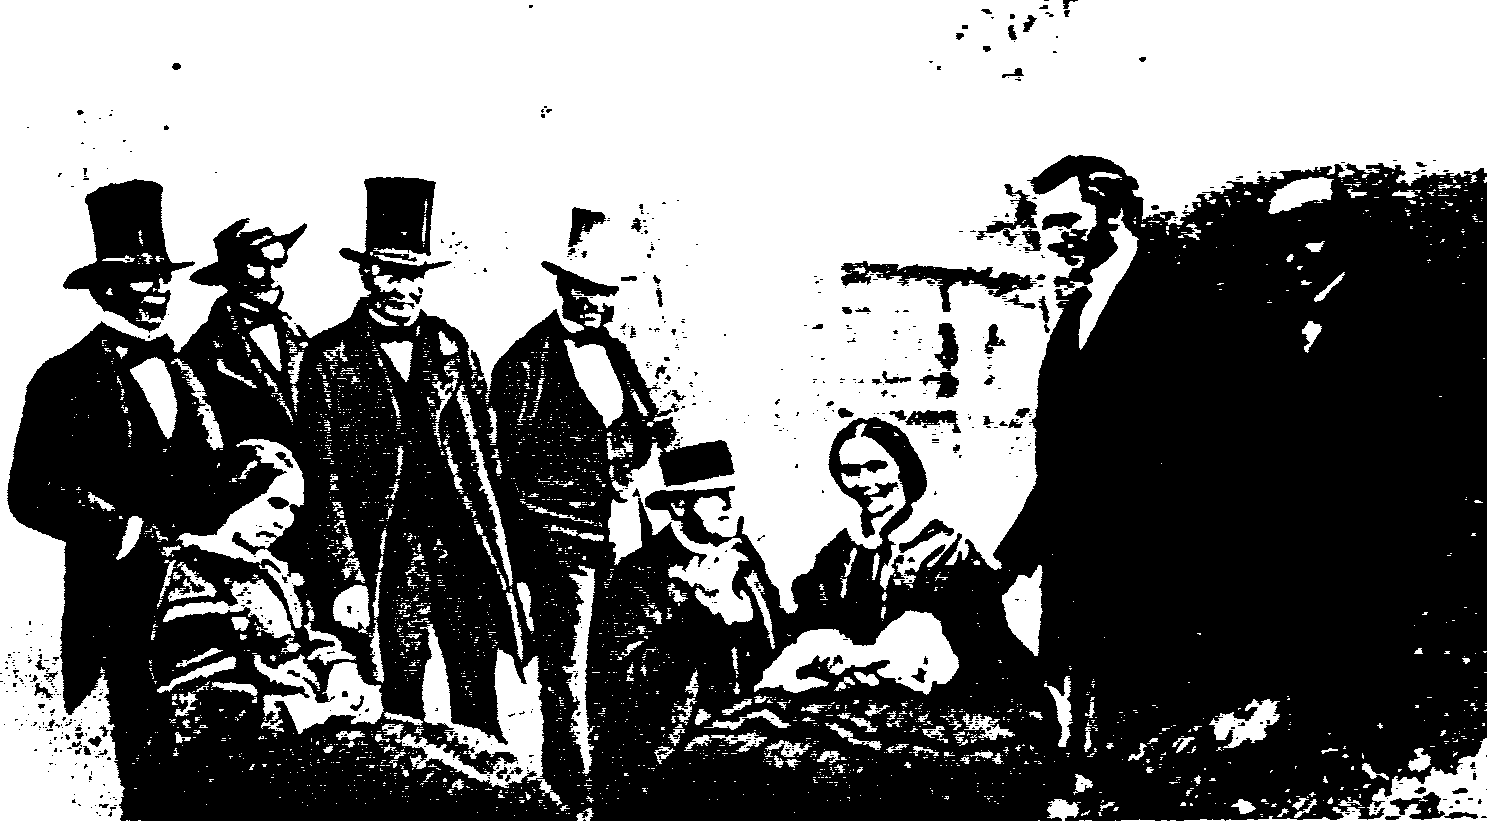 William Weaver (kneeling centre) with George Turner, Didier Joubert, Charles Moore and Mr Pennington, circa 1860